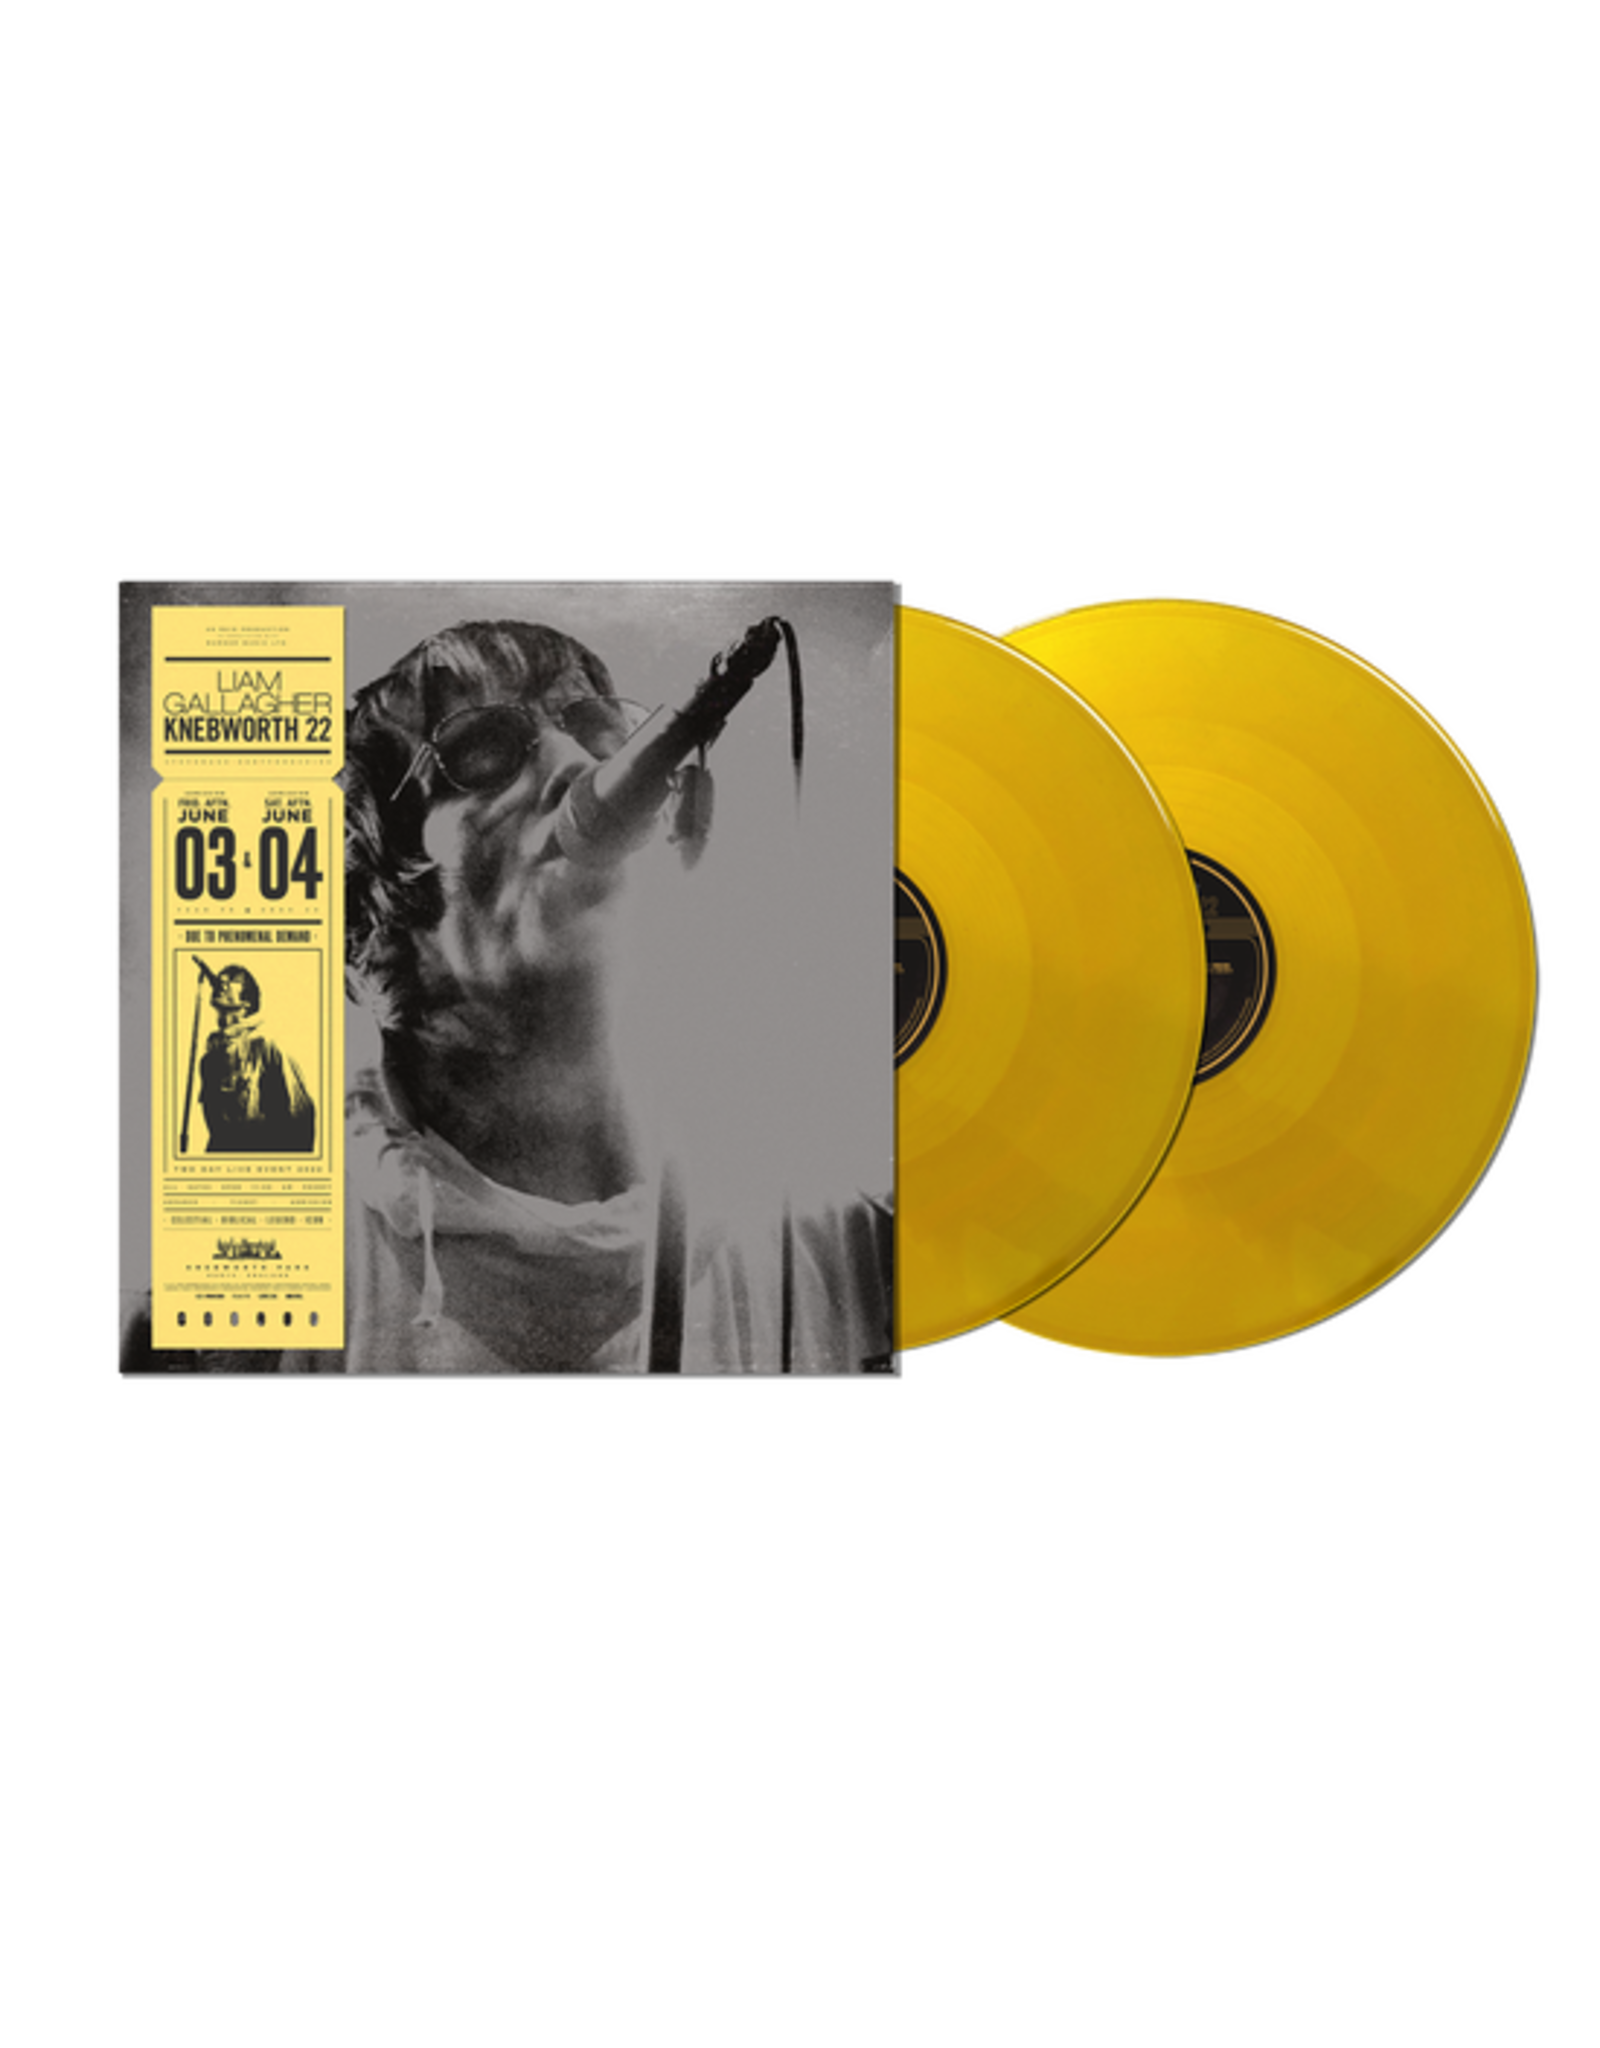 Liam Gallagher - Knebworth 22 (Exclusive Sun Yellow Vinyl)